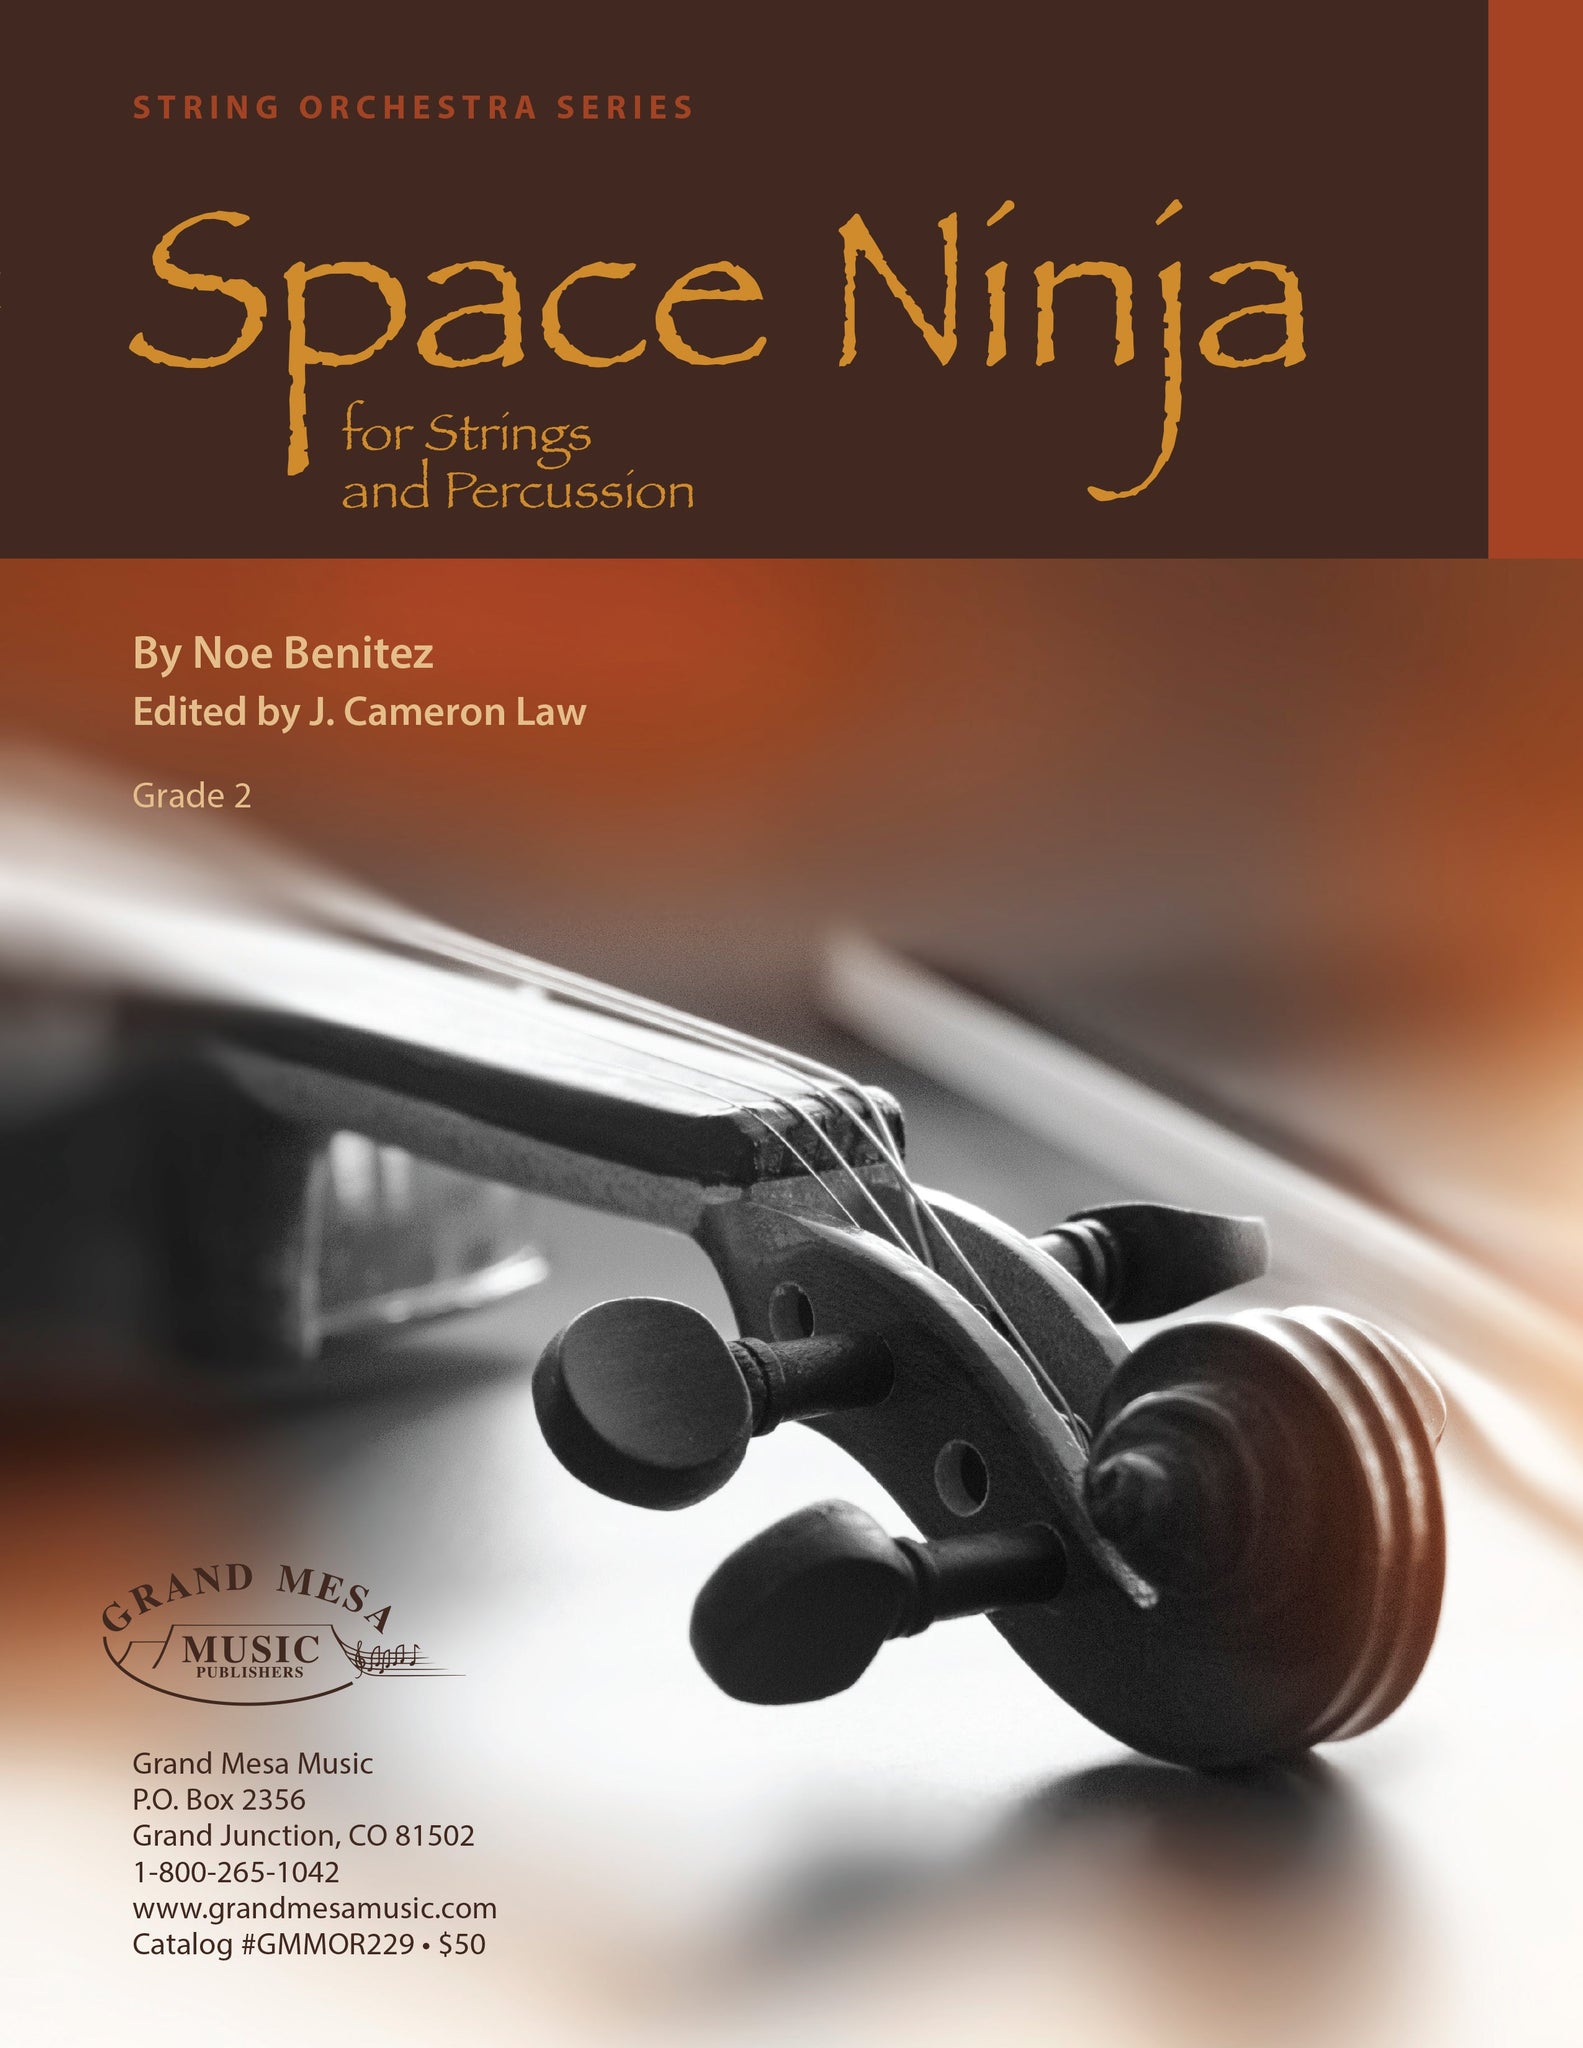 Strings sheet music cover of Space Ninja, composed by Noe Benitez.